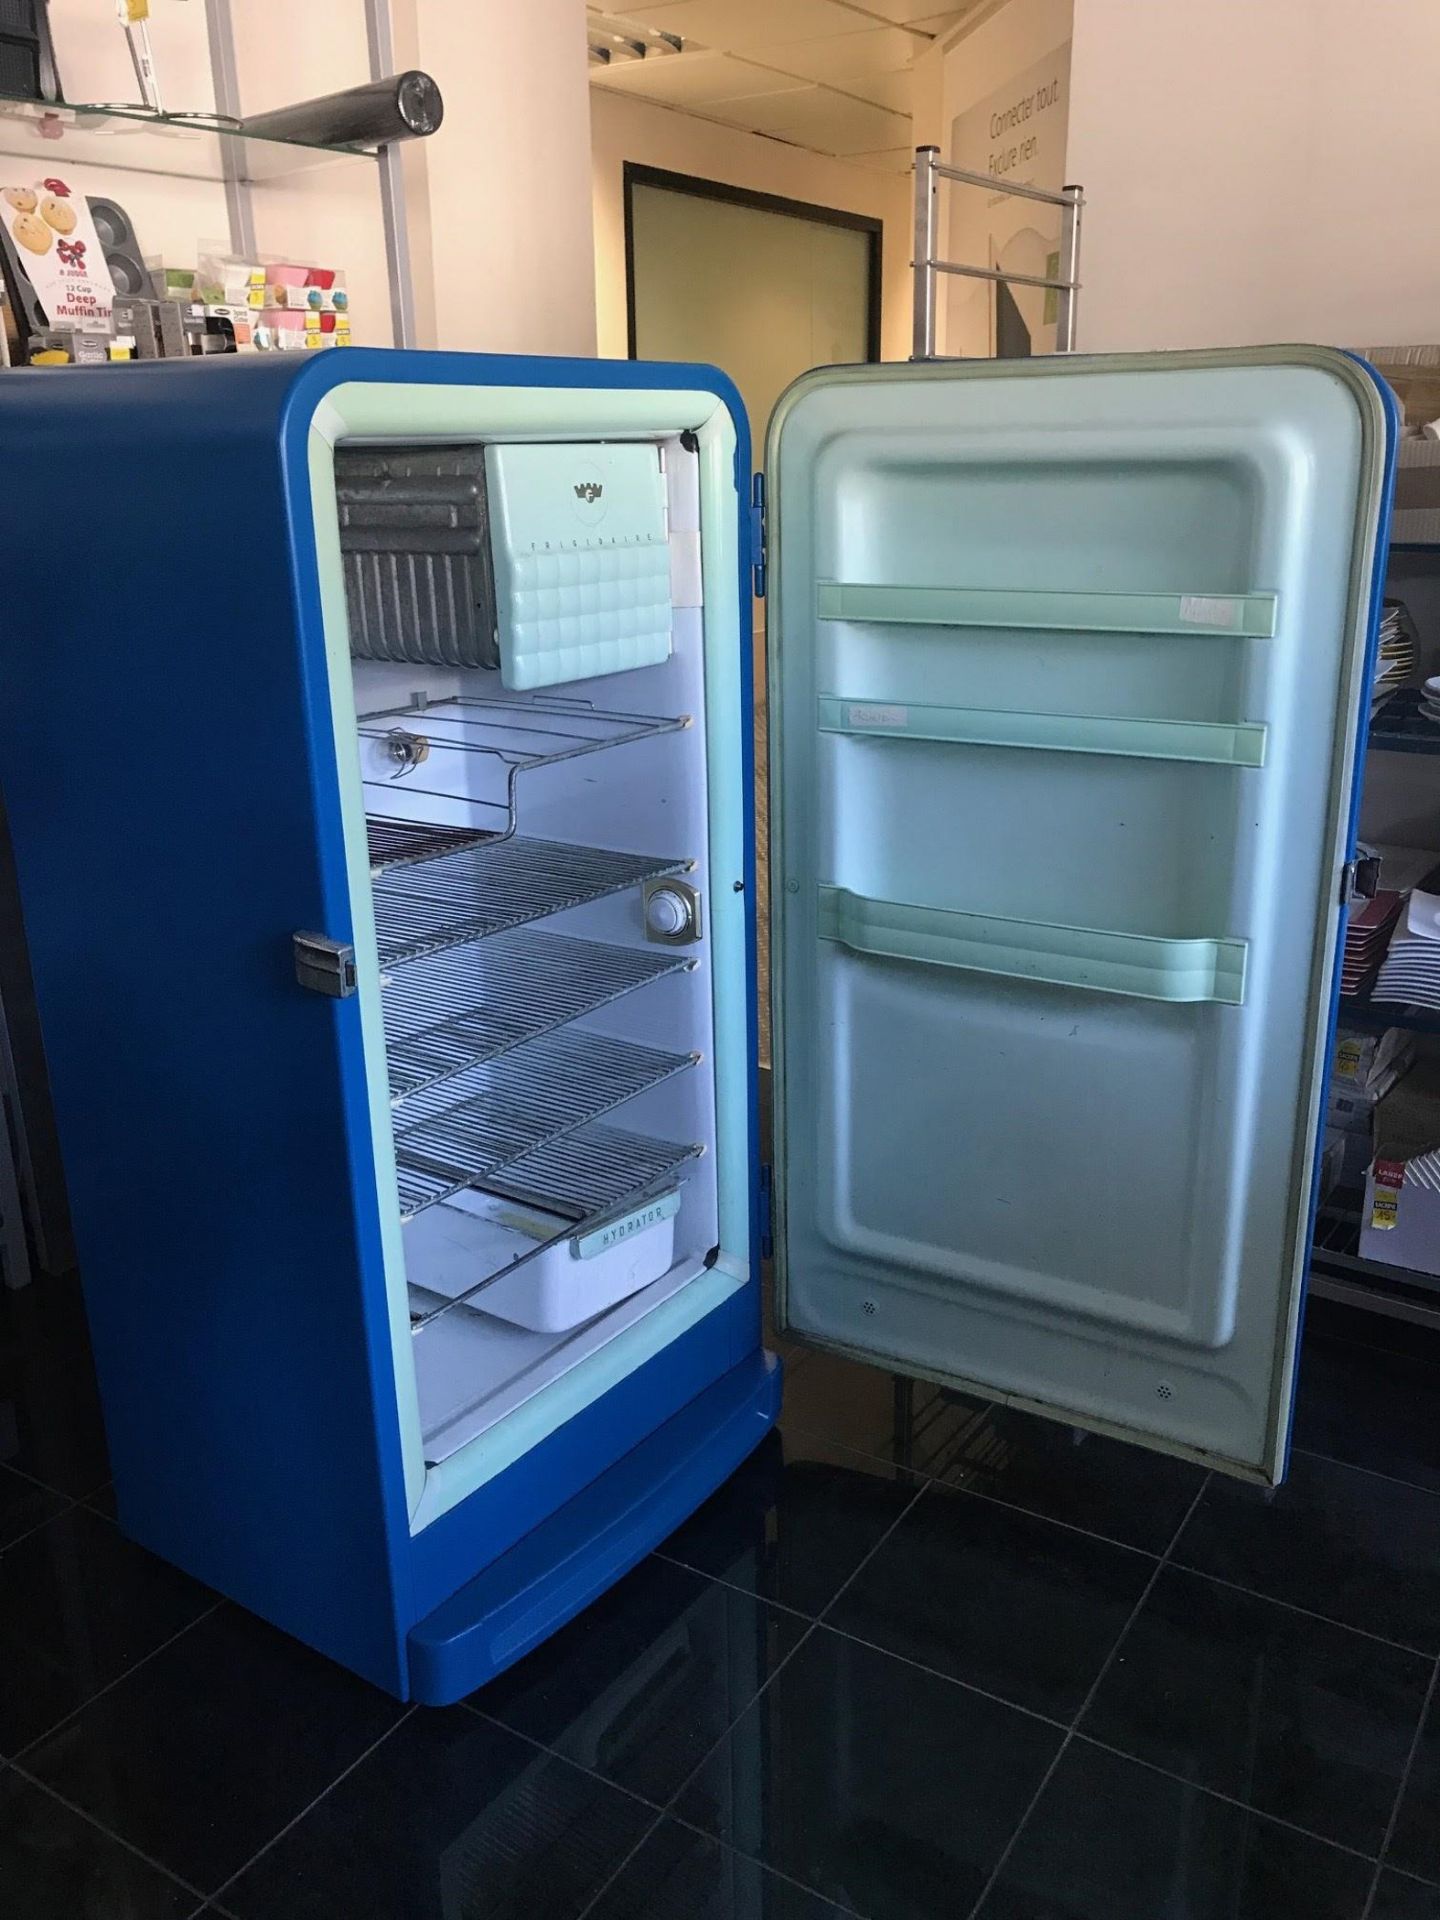 1961 Frigidaire Refrigerator in Matt Blue Color - Image 2 of 2